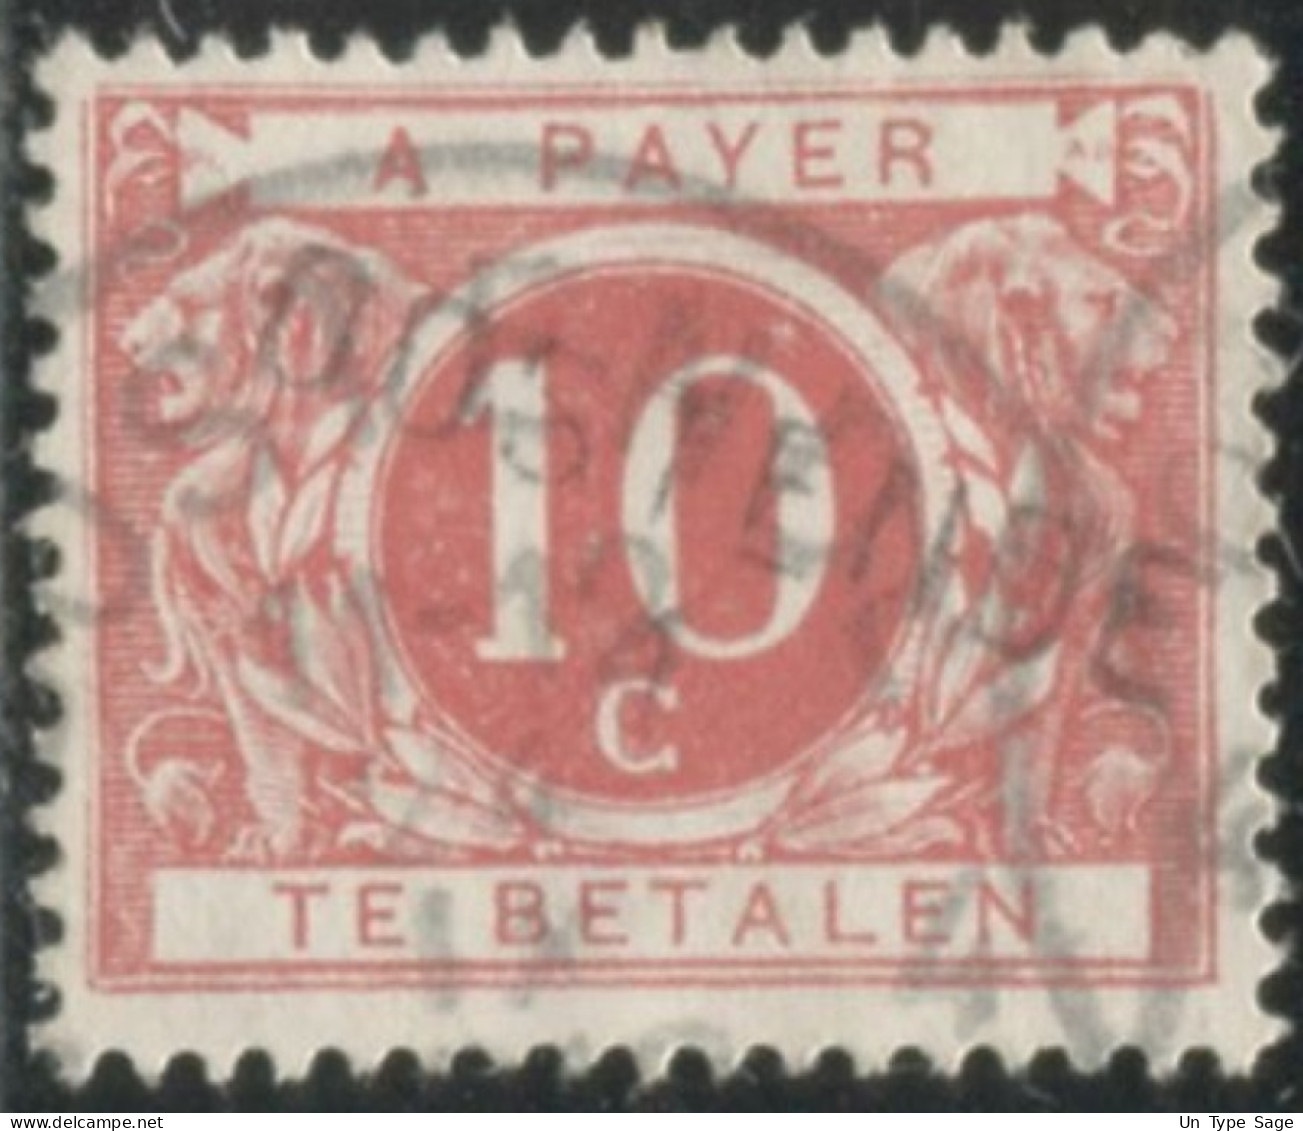 Belgique Timbre-taxe (TX) - Surcharge Locale De Distributeur - OOSTENDE - (F989) - Stamps